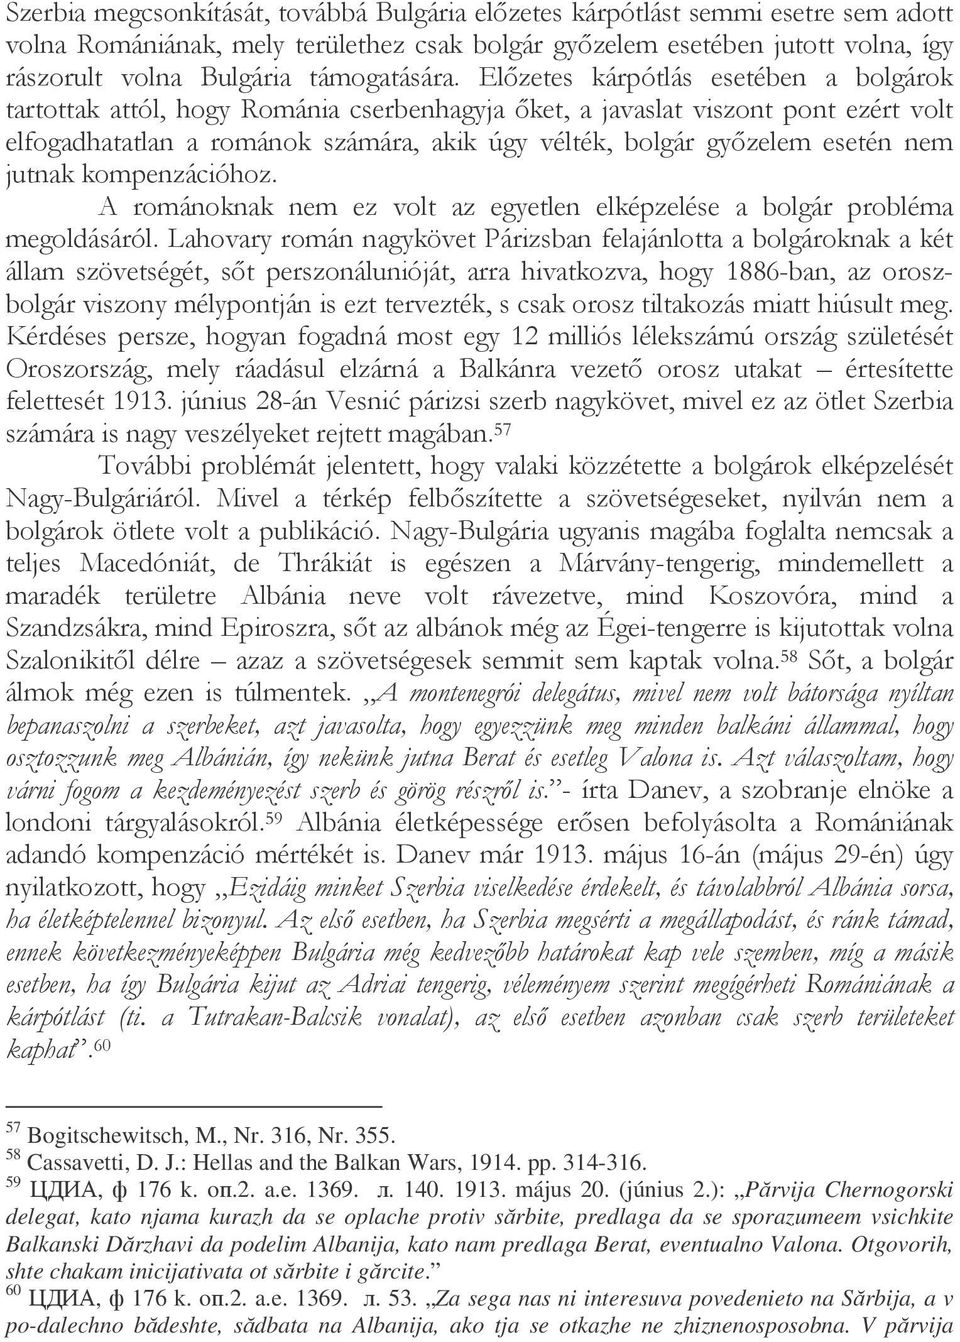 58 Cassavetti, D. J.: Hellas and the Balkan Wars, 1914. pp. 314-316. 59, 176 k. o.2. a.e. 1369.. 140. 1913. május 20. (június 2.